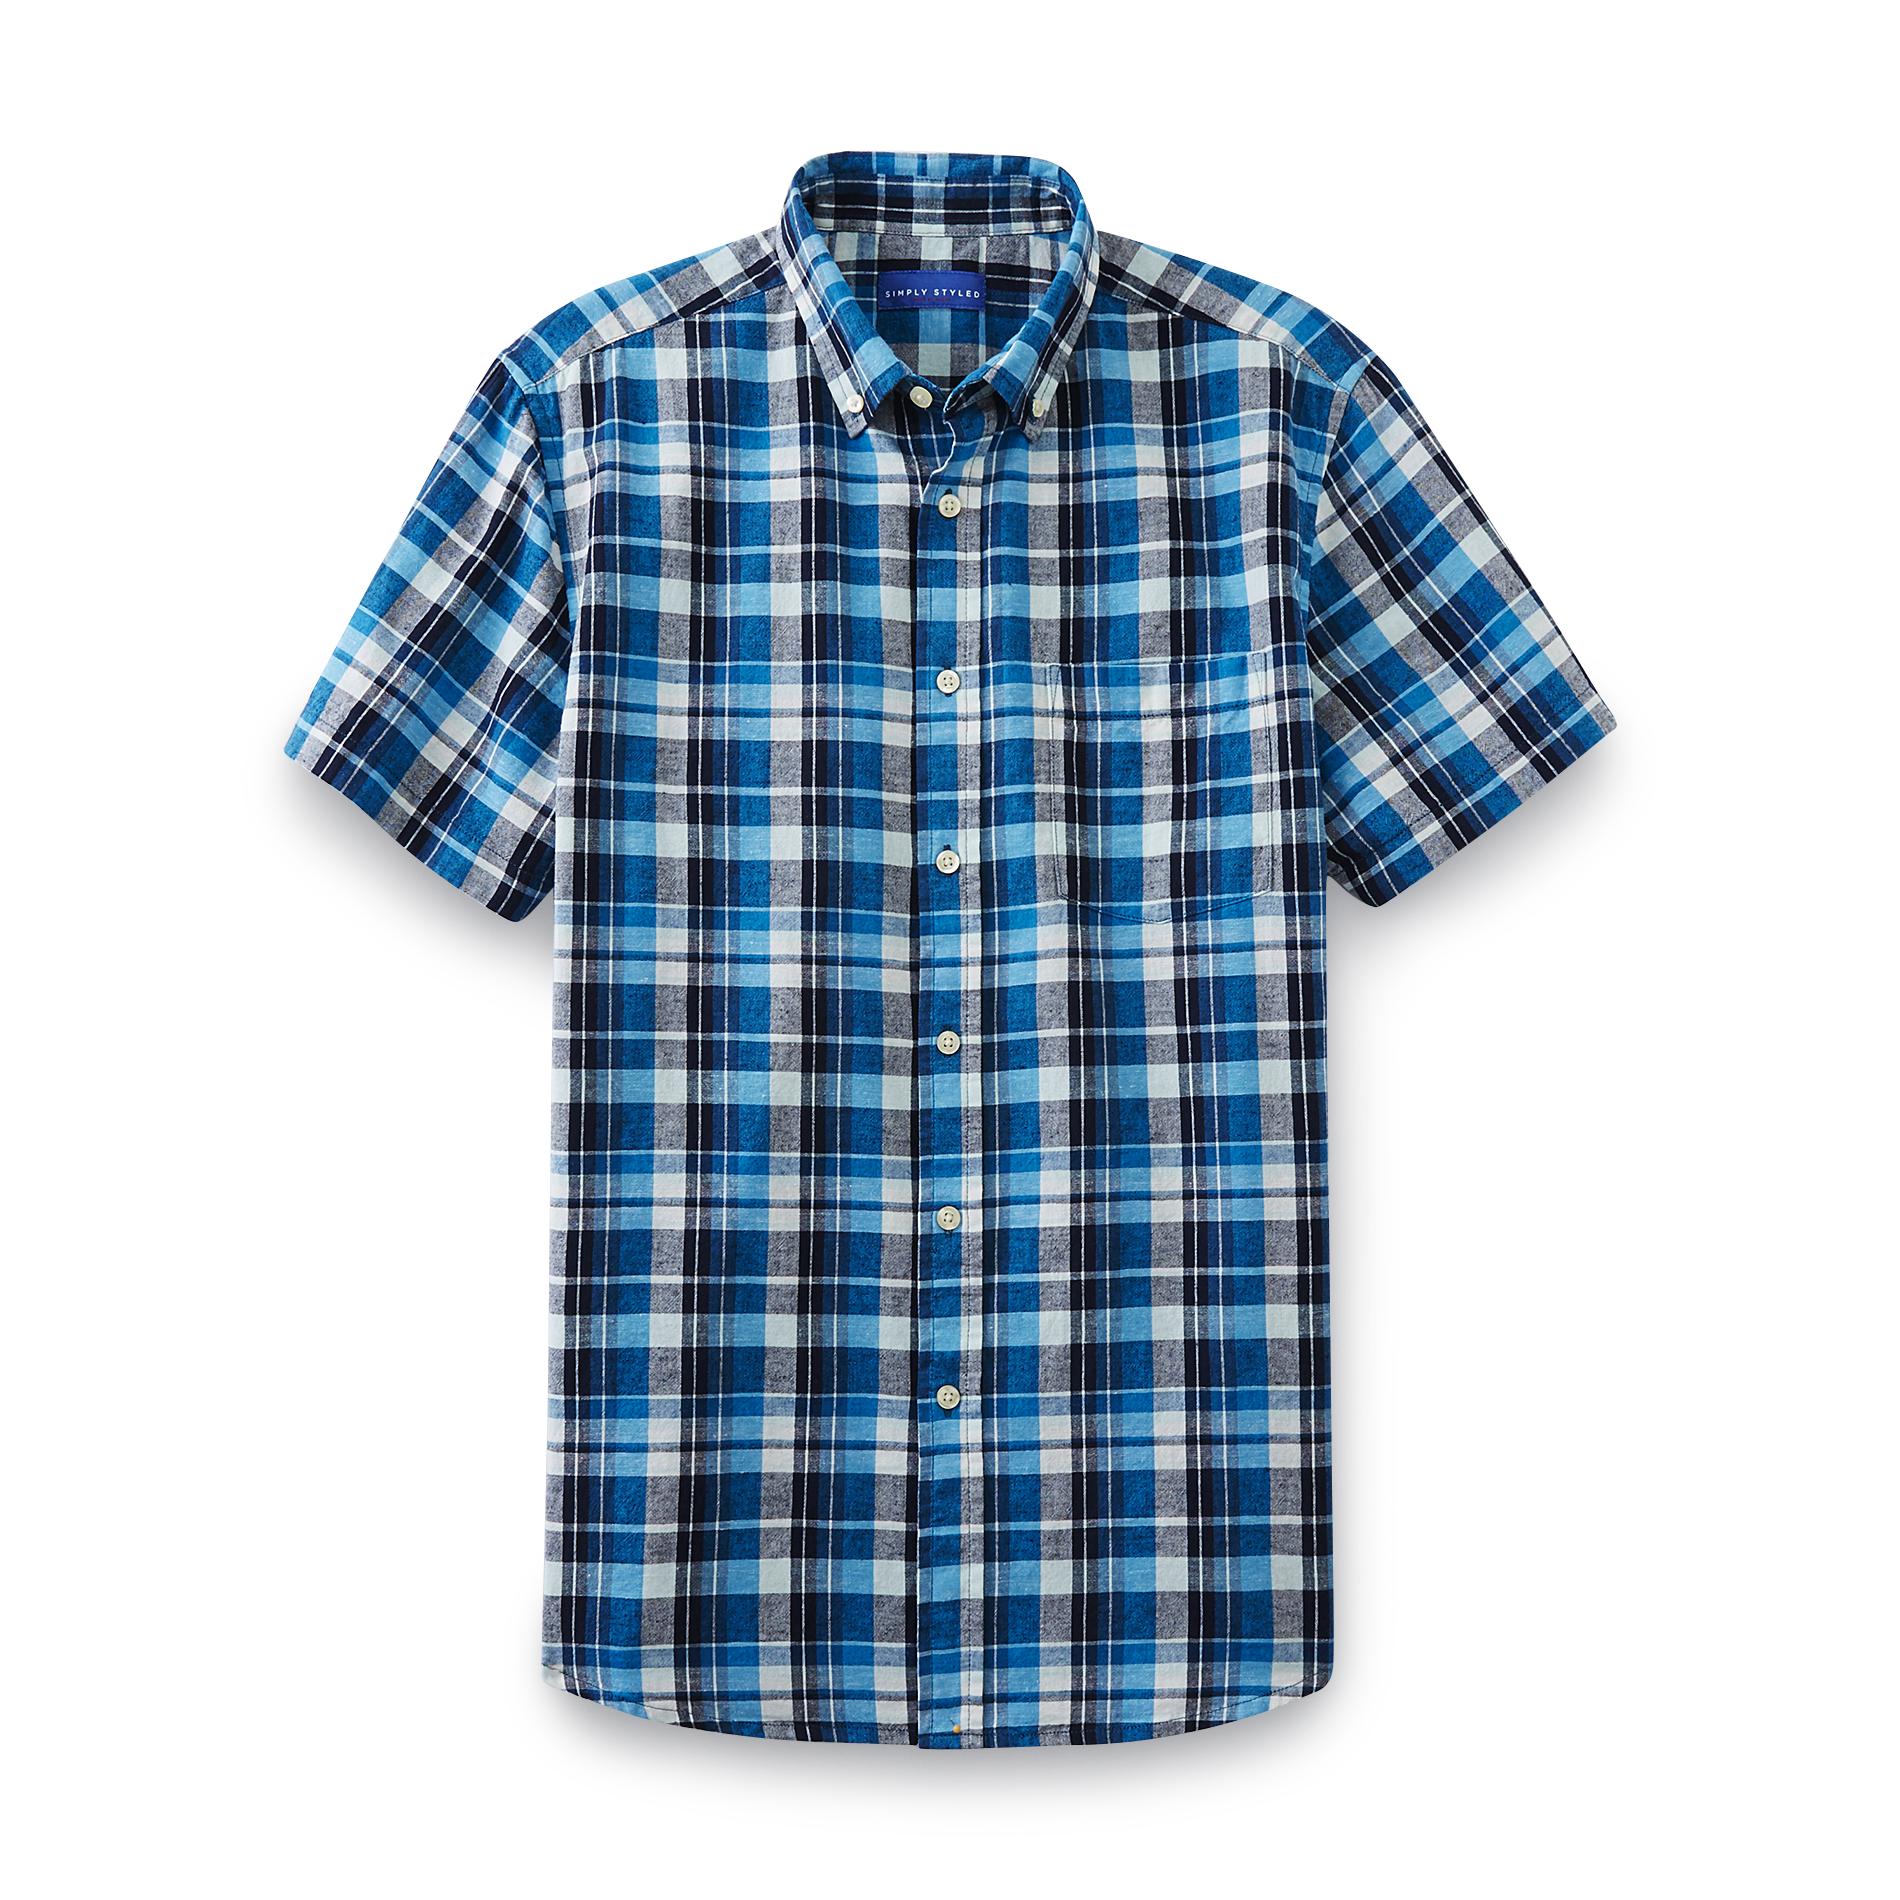 Simply Styled Men's Short-Sleeve Shirt - Blue Sapphire Plaid